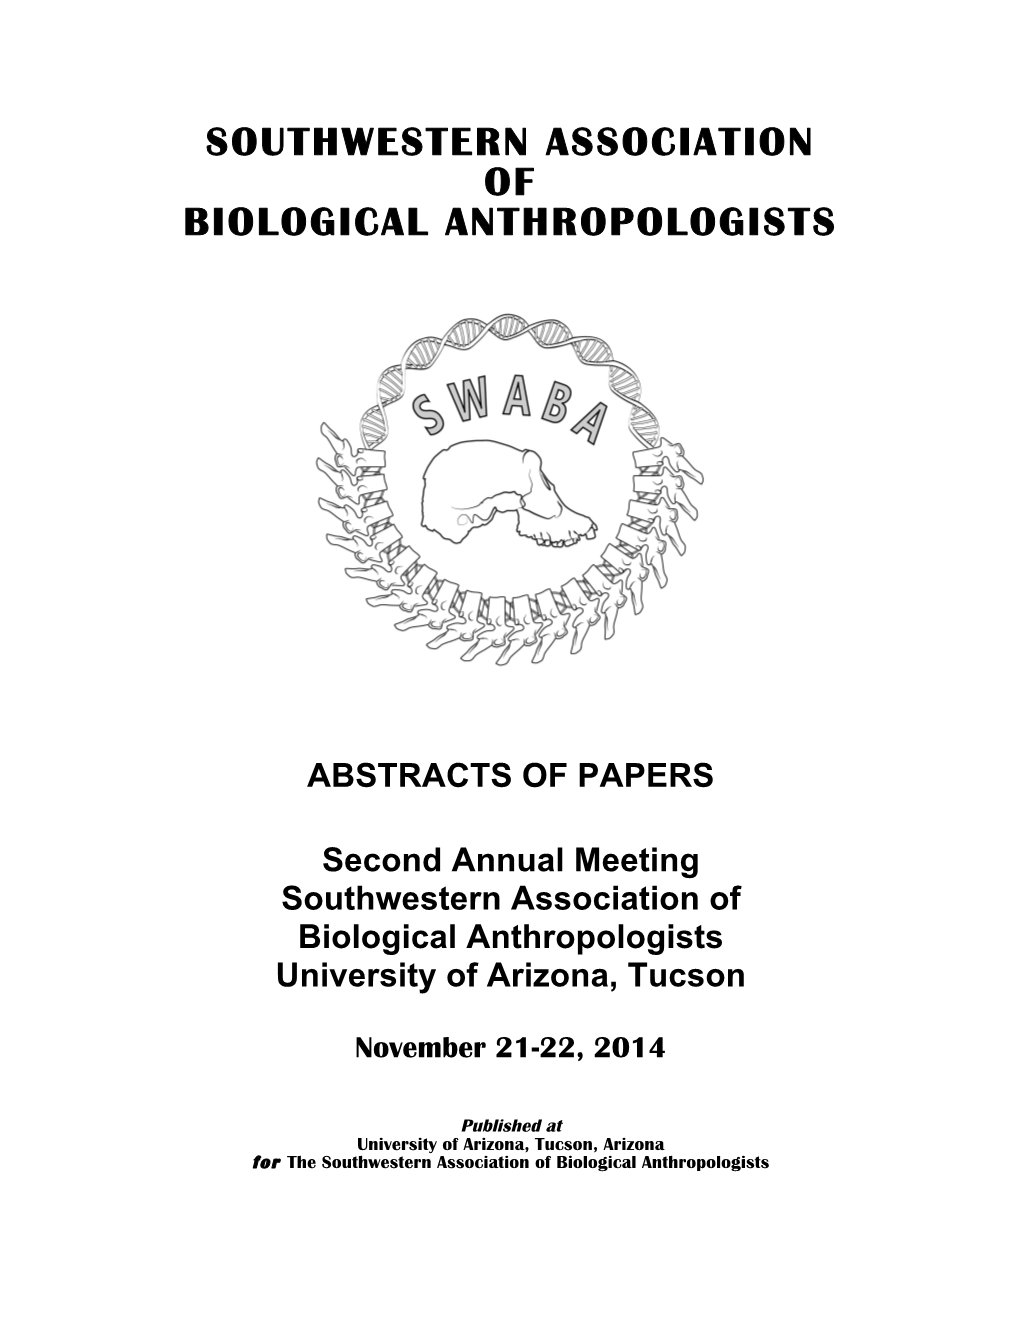 Southwestern Association of Biological Anthropologists